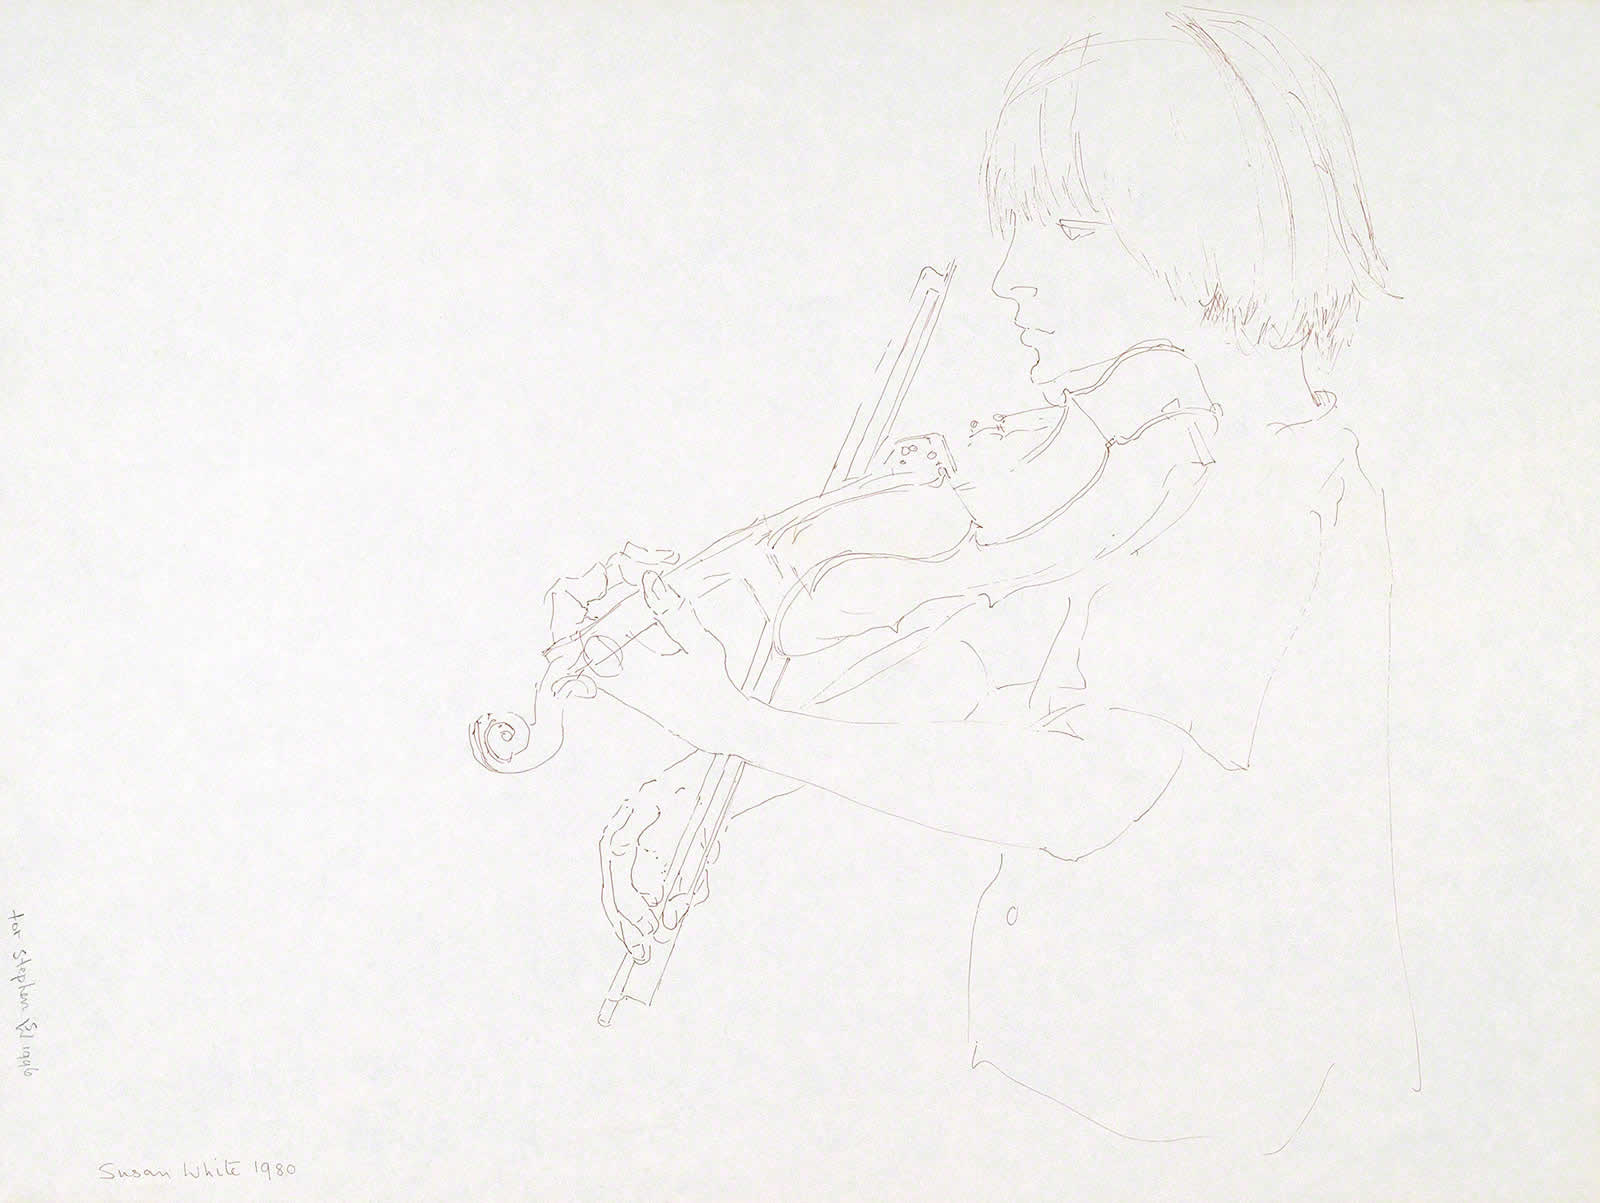 Stephen practising Violin (bridge in view) by Susan Dorothea White